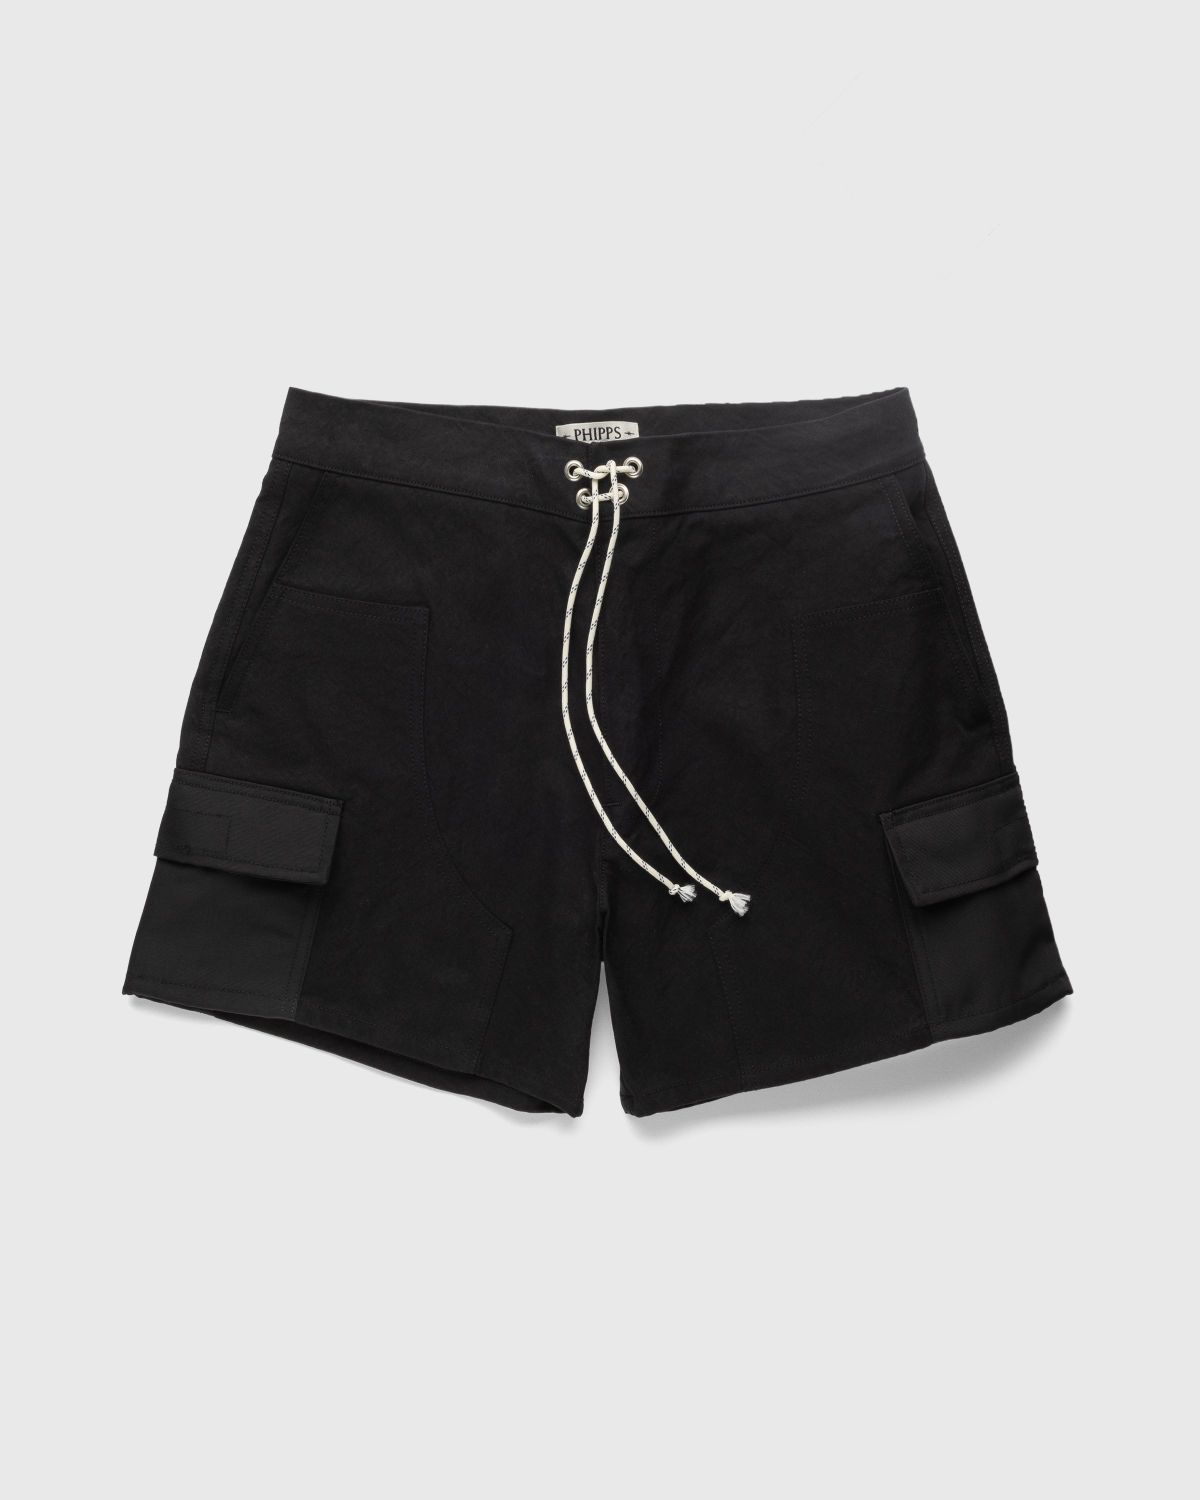 Phipps – Action Shorts Ranger Cotton Black - Short Cuts - Black - Image 1